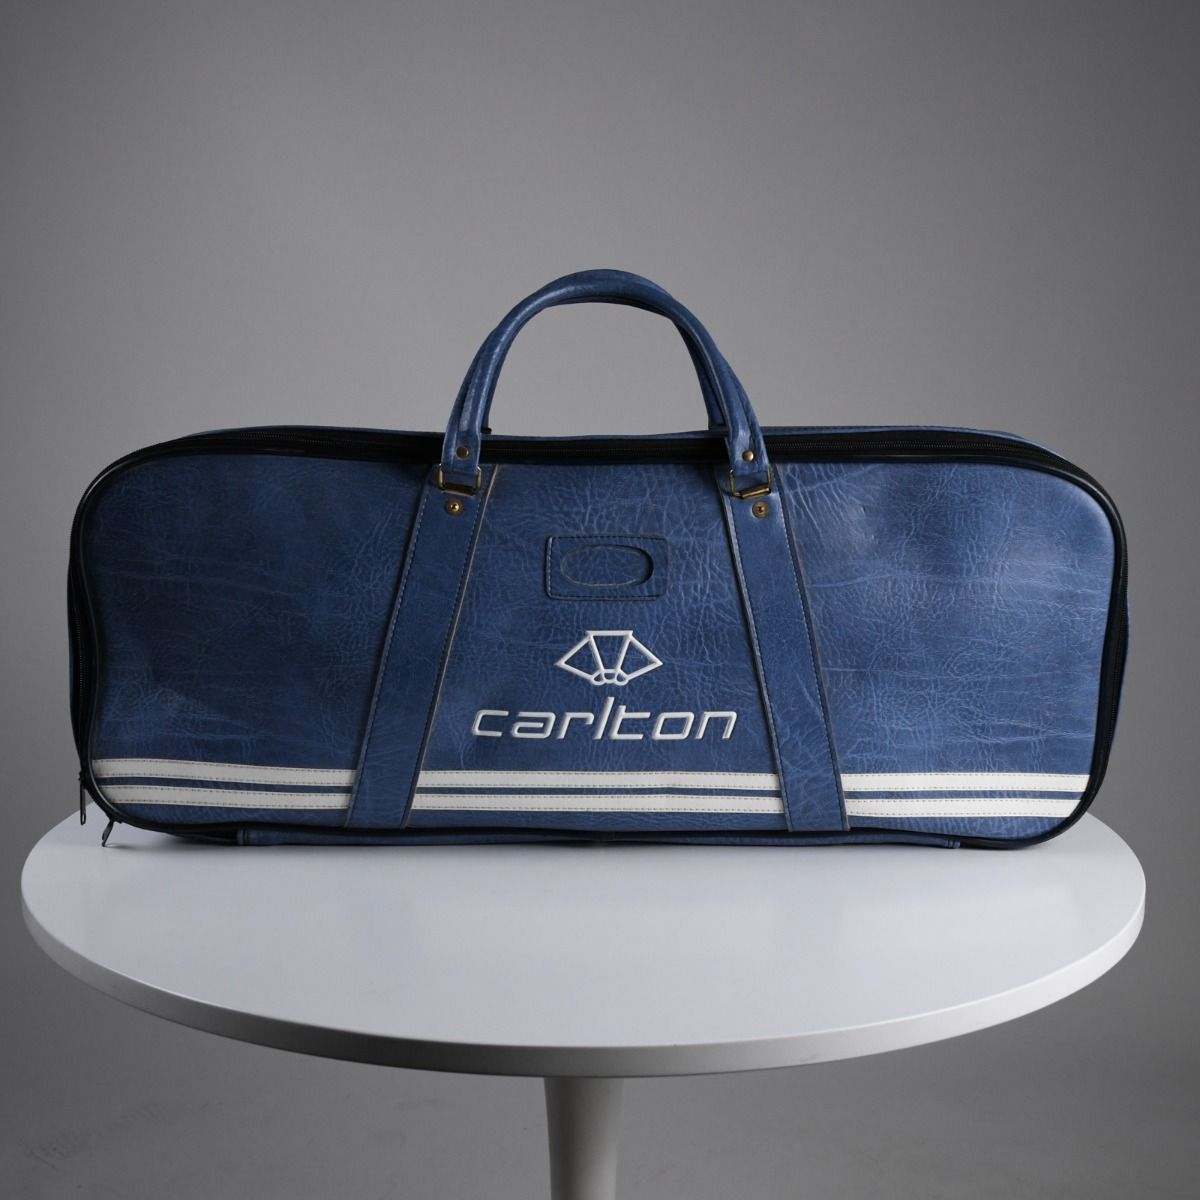 Carlton 1970s Sports Bag